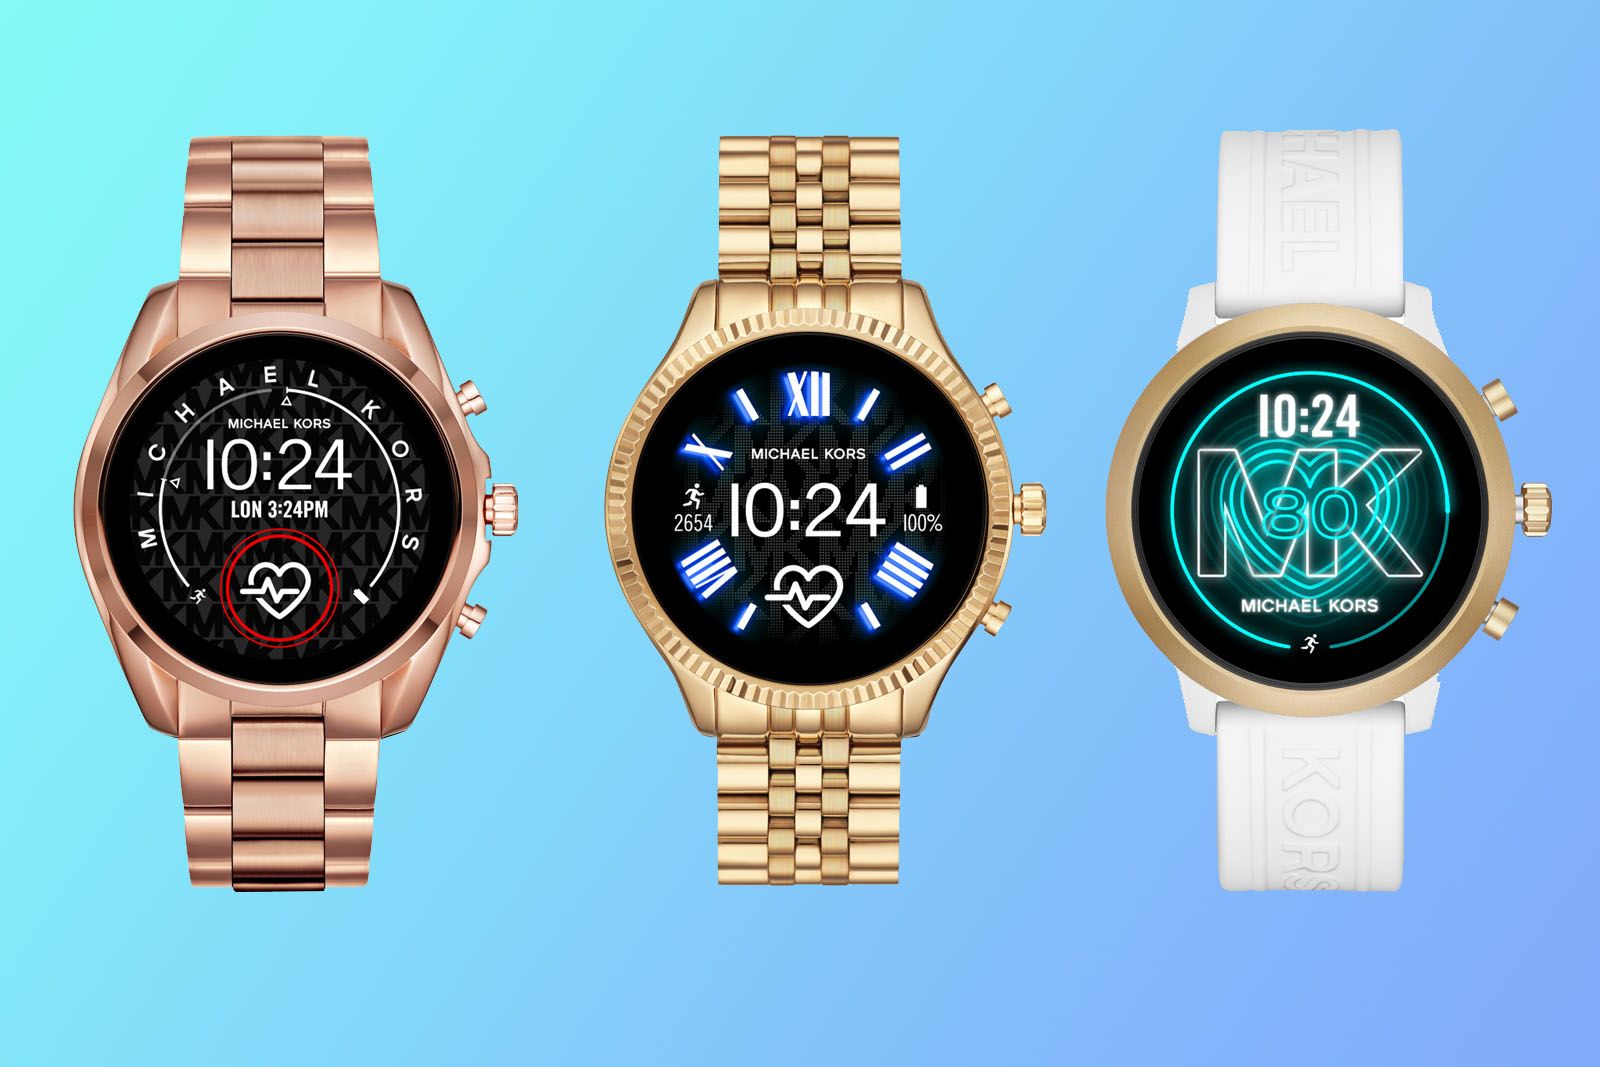 Michael Kors expands smartwatch portfolio with Access Bradshaw 2 Lexington 2 and sporty MKGO image 1